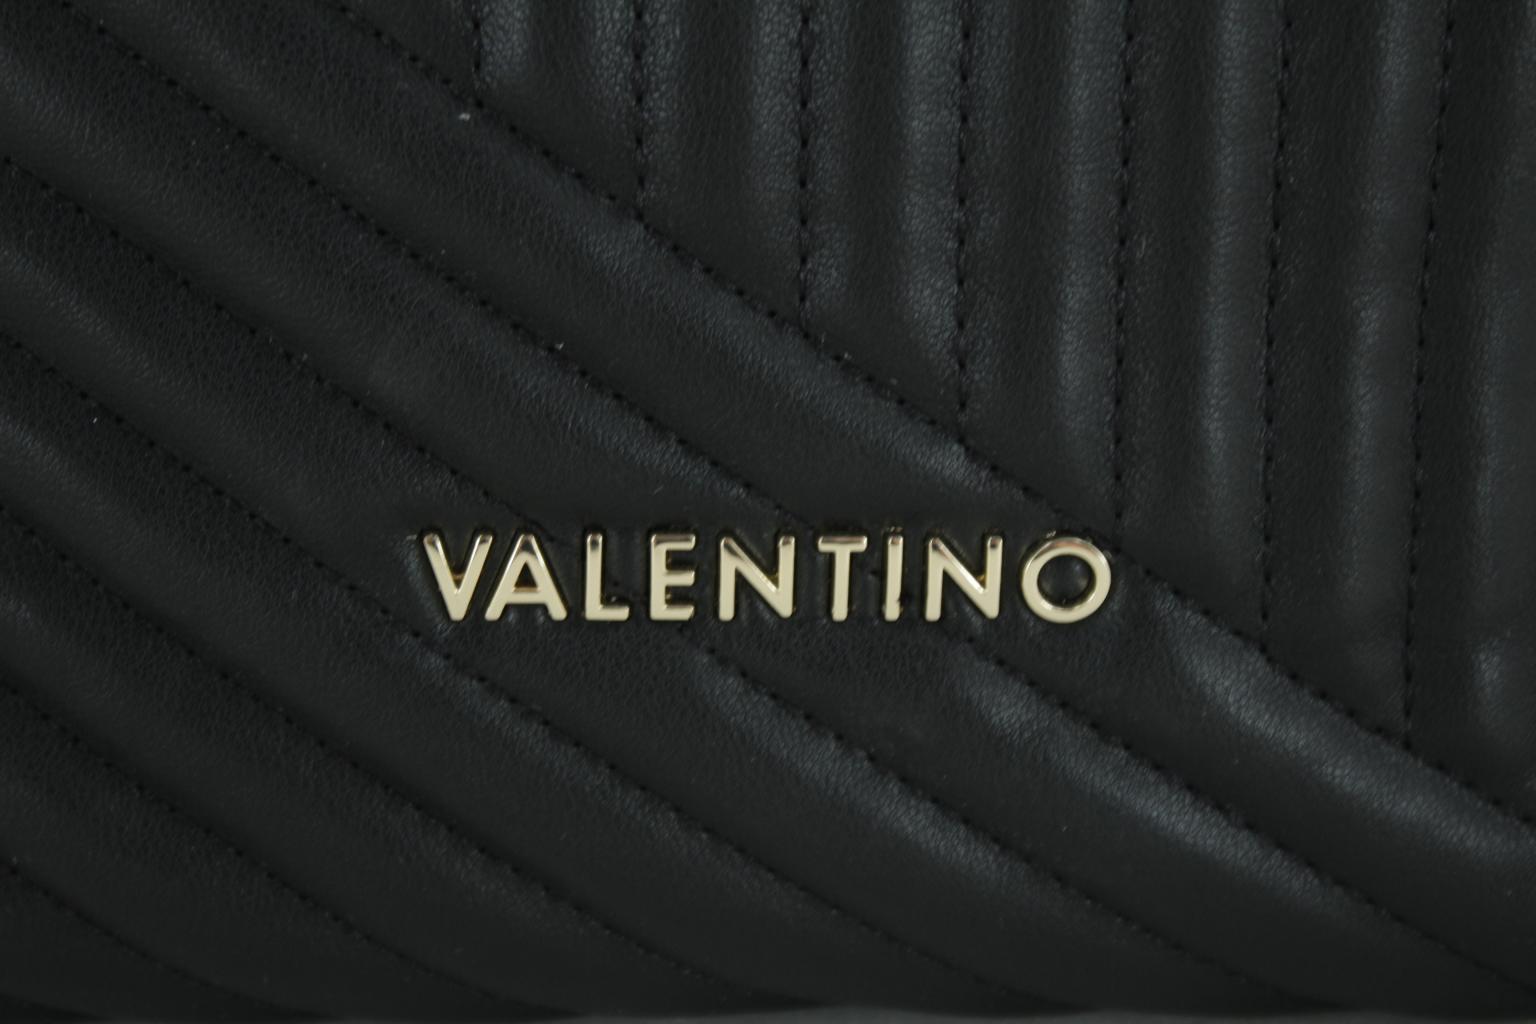 Valentino Crossover Bag Laax Re schwarz Kettenriemen